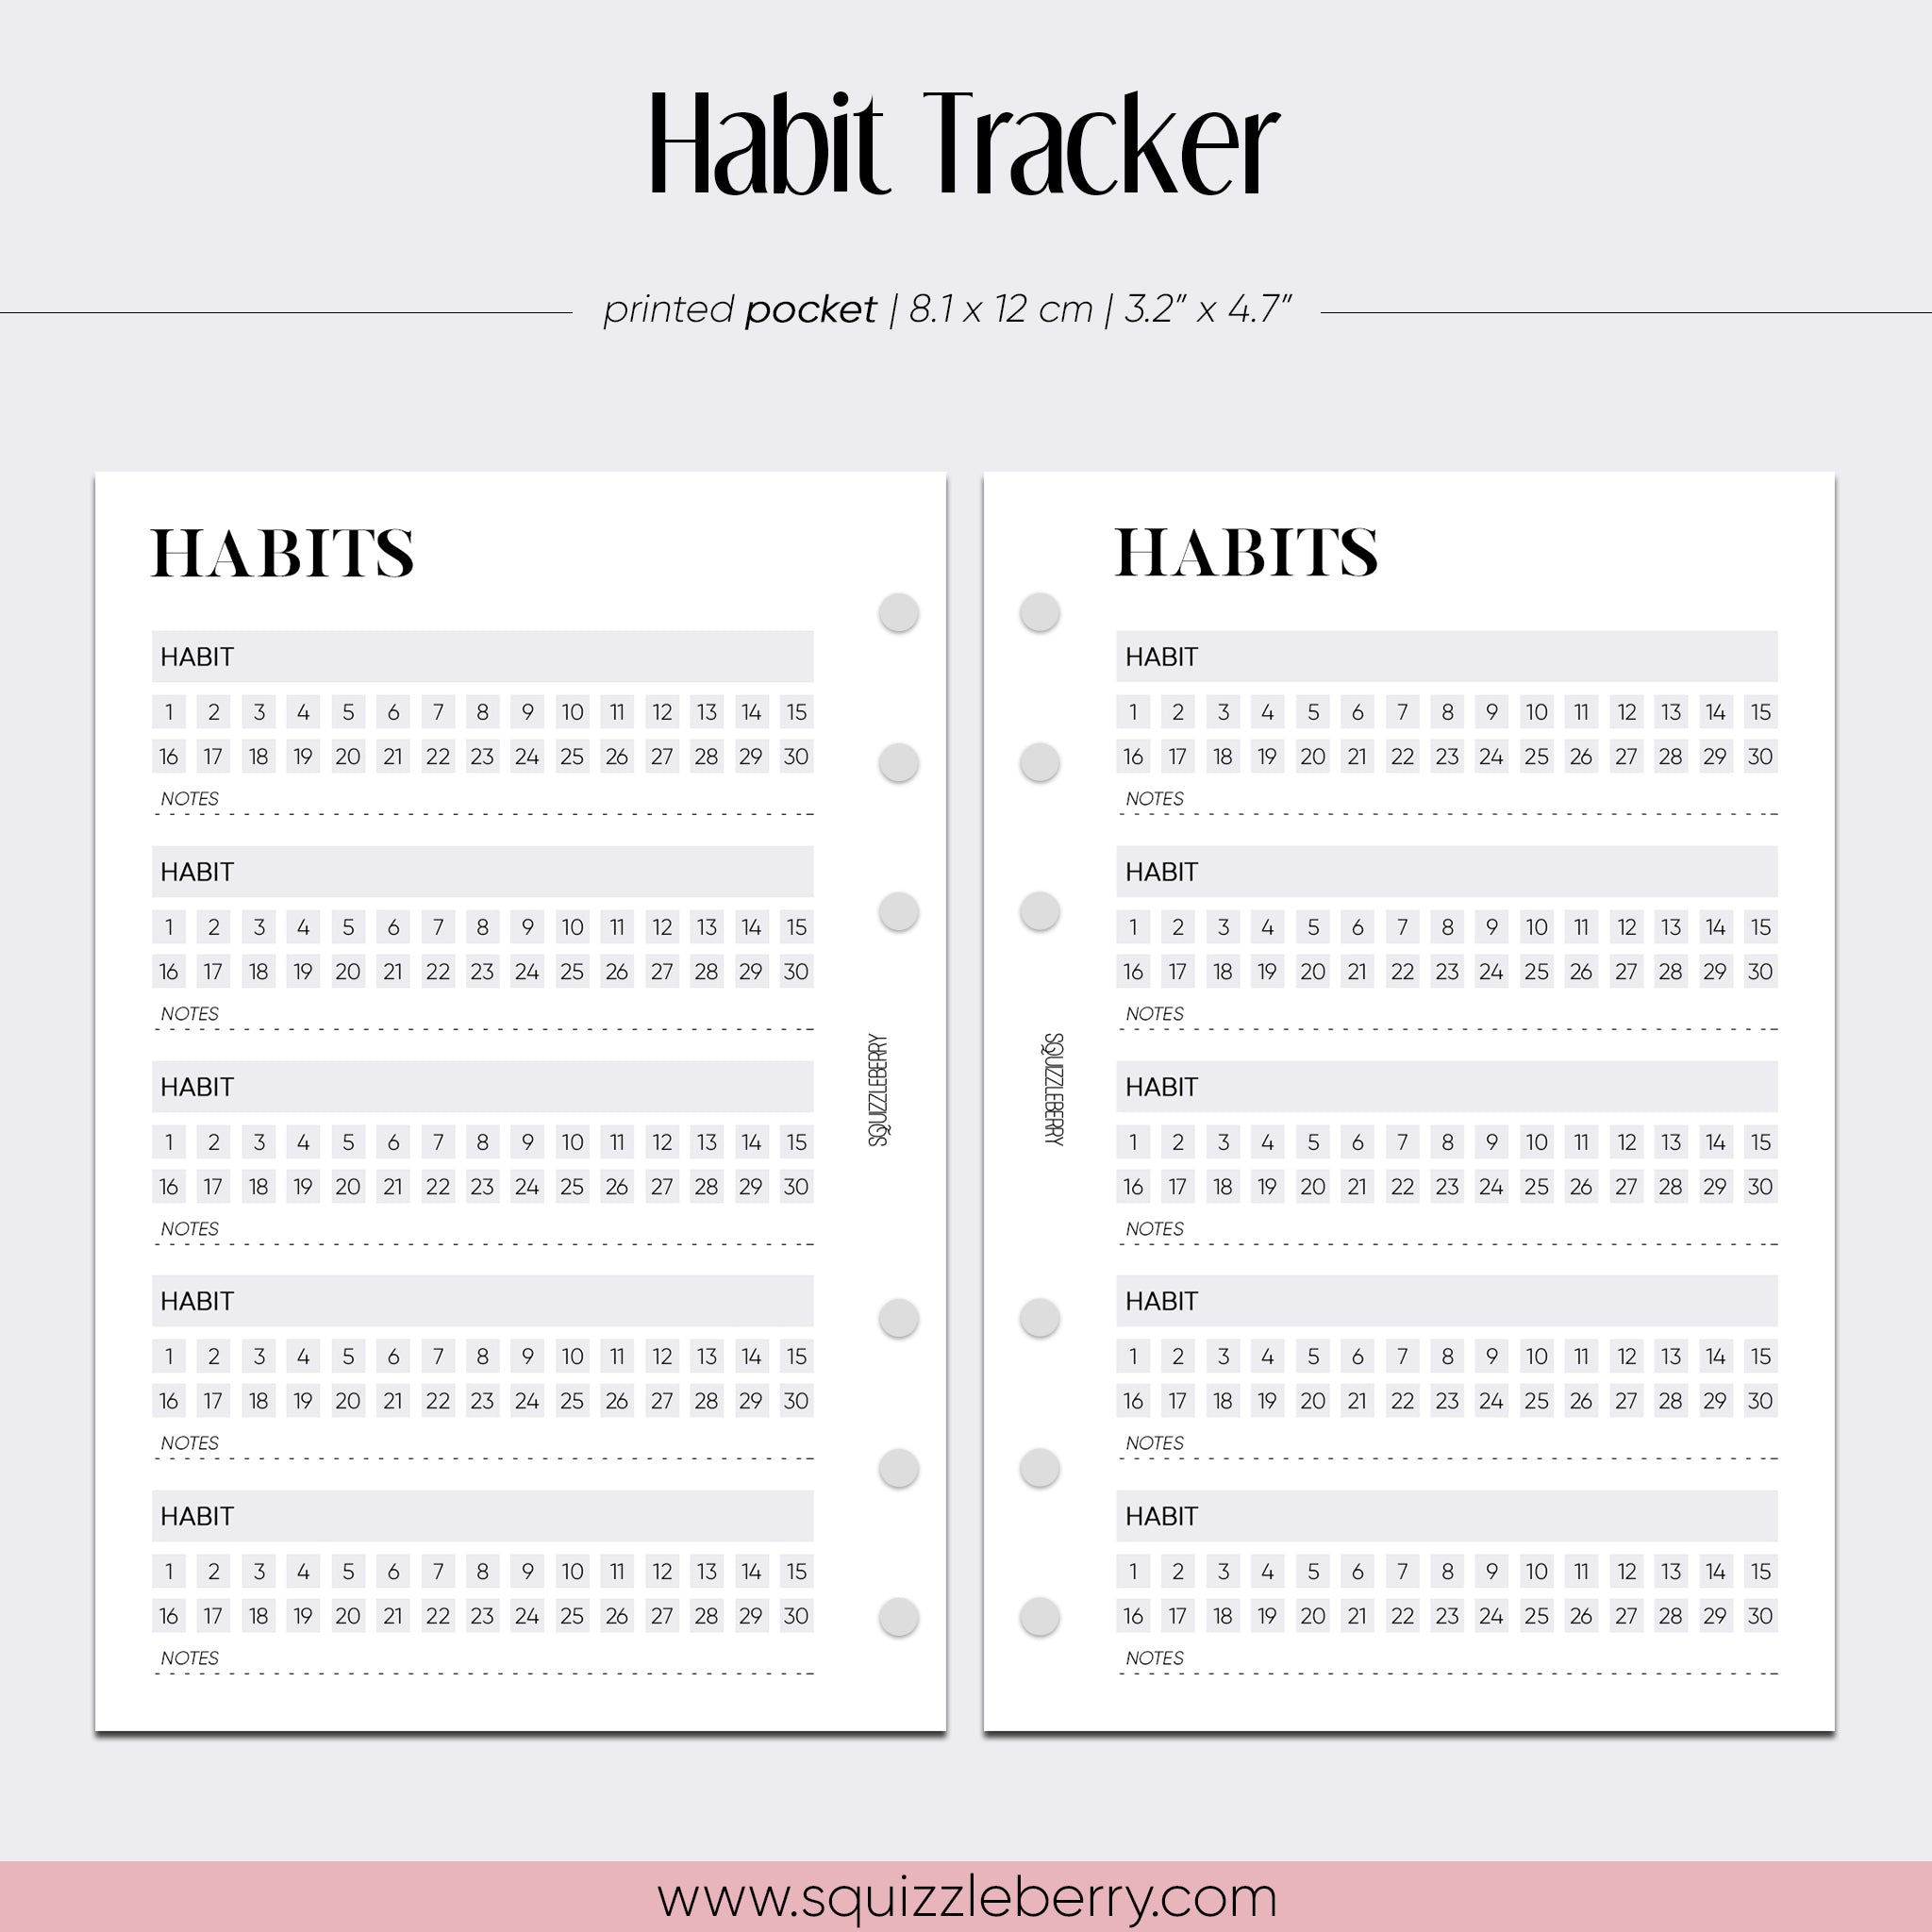 Habit Tracker - Pocket | SquizzleBerry